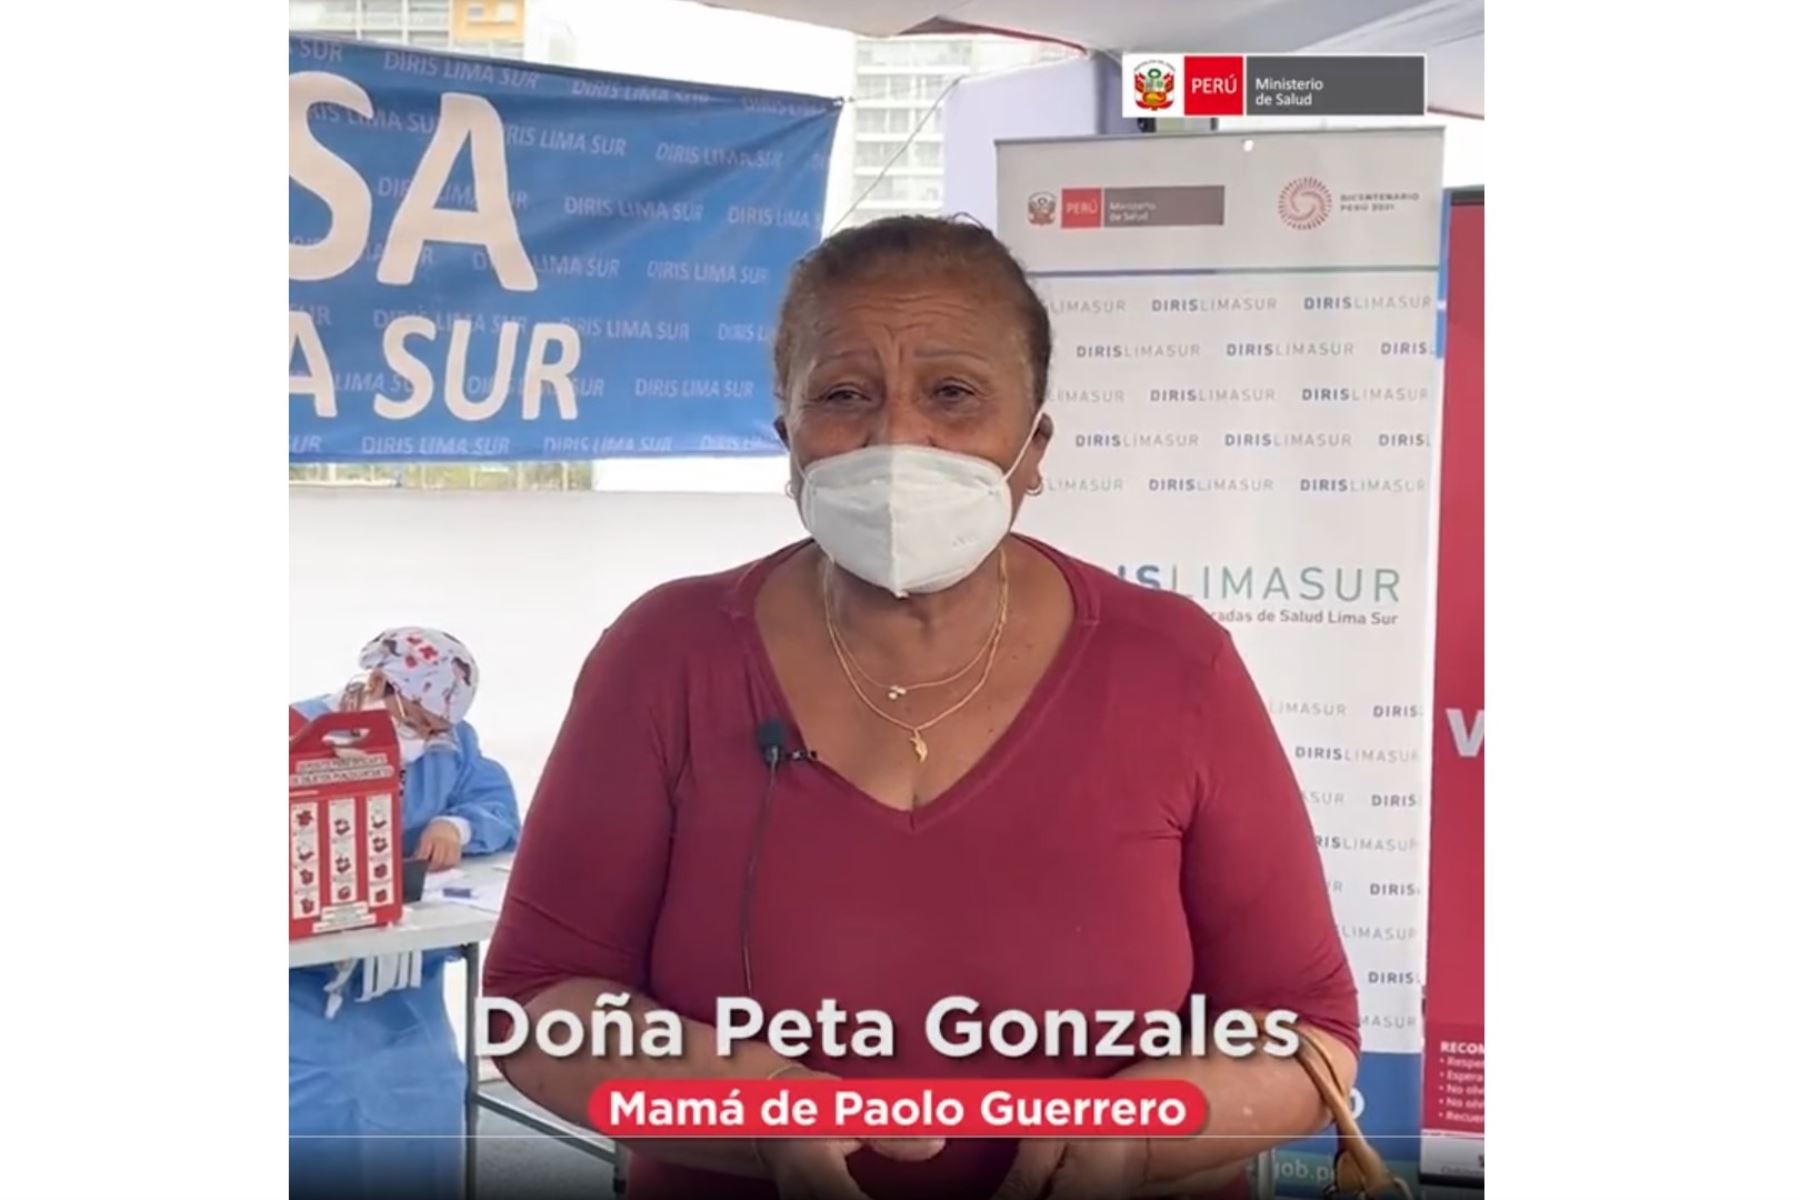 Petronila Gonzales, madre de Paolo Guerrero, llama a recibir la tercera dosis de la vacuna contra la covid-19.